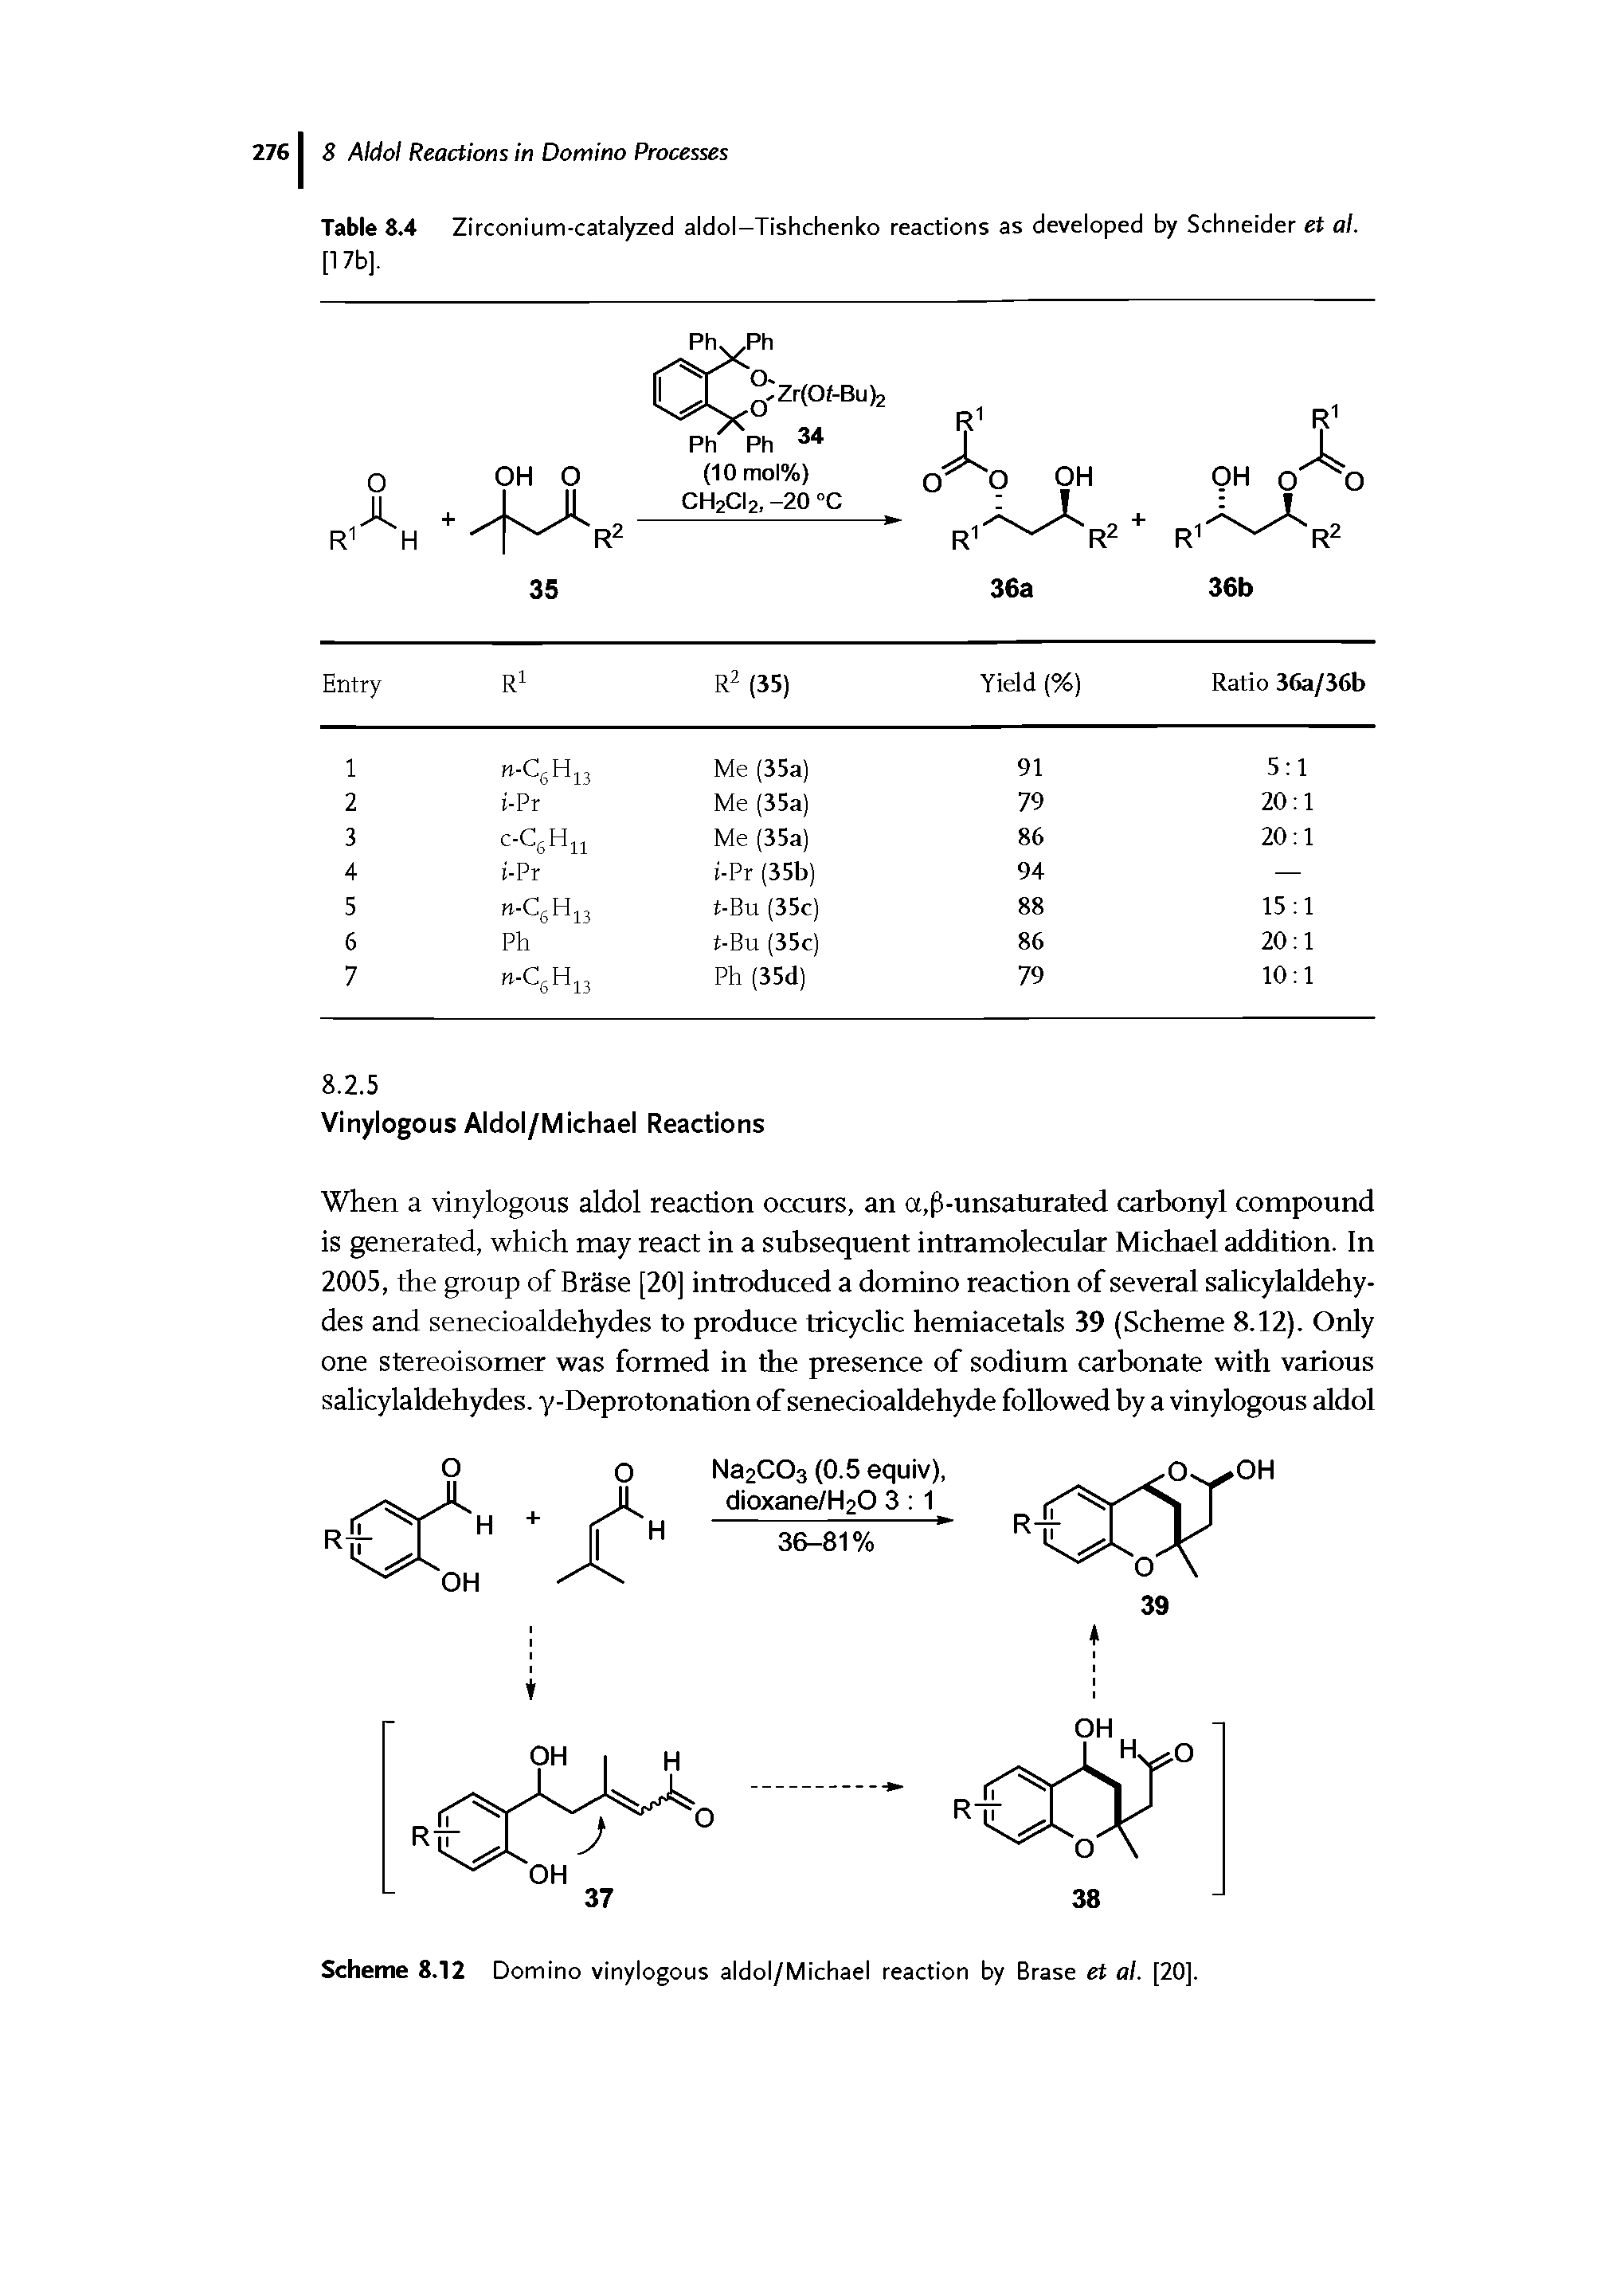 Table 8.4 Zirconium-catalyzed aldol-Tishchenko reactions as developed by Schneider et al. [17b].